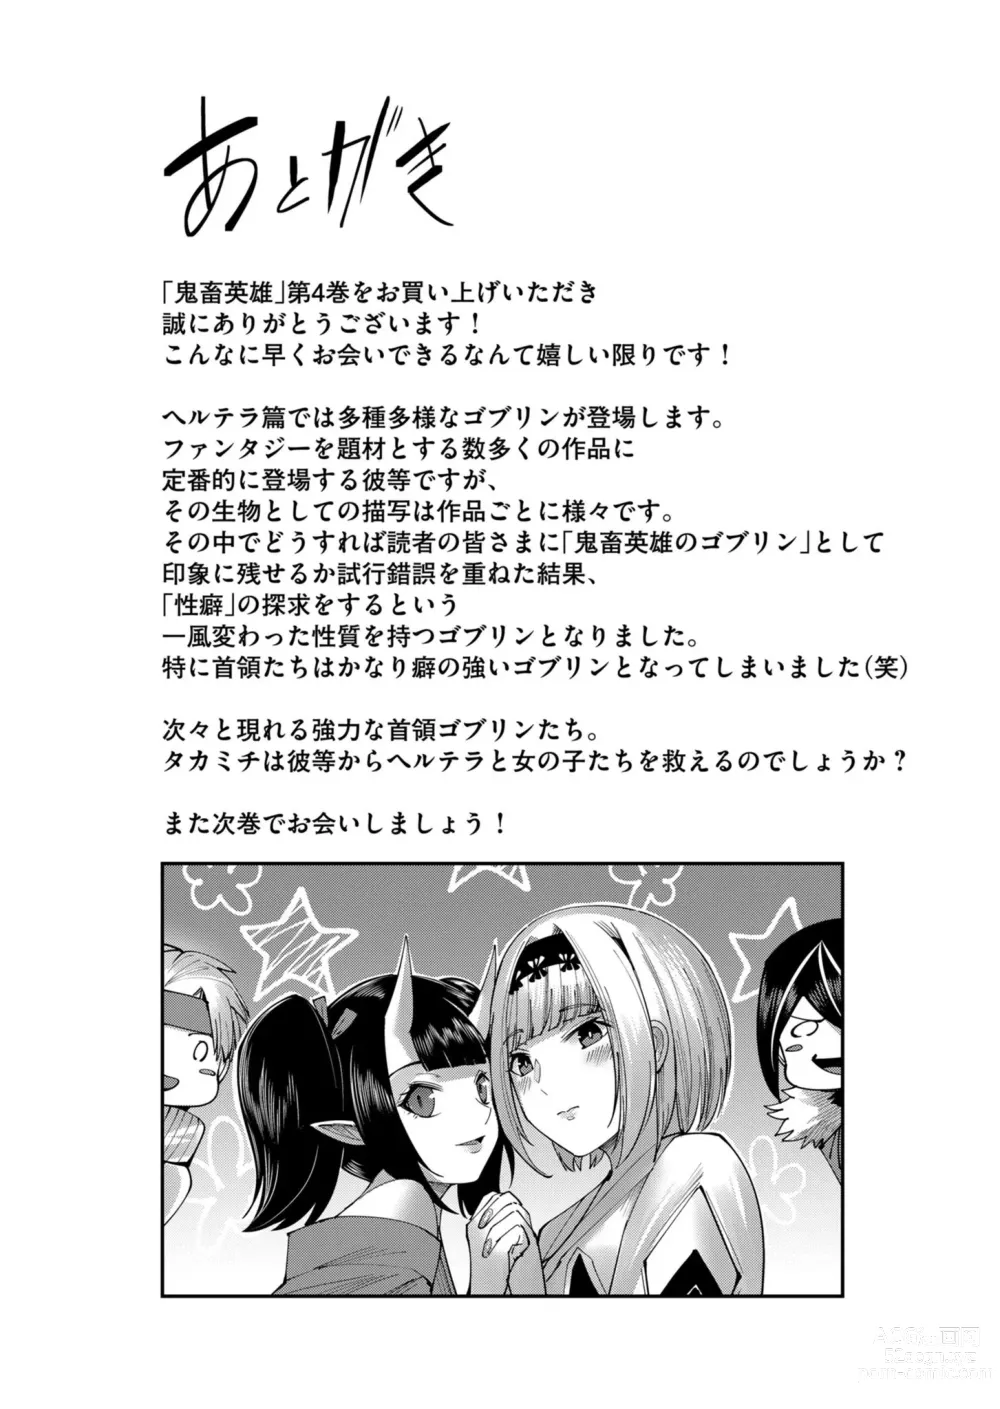 Page 161 of manga Kichiku Eiyuu Vol.04